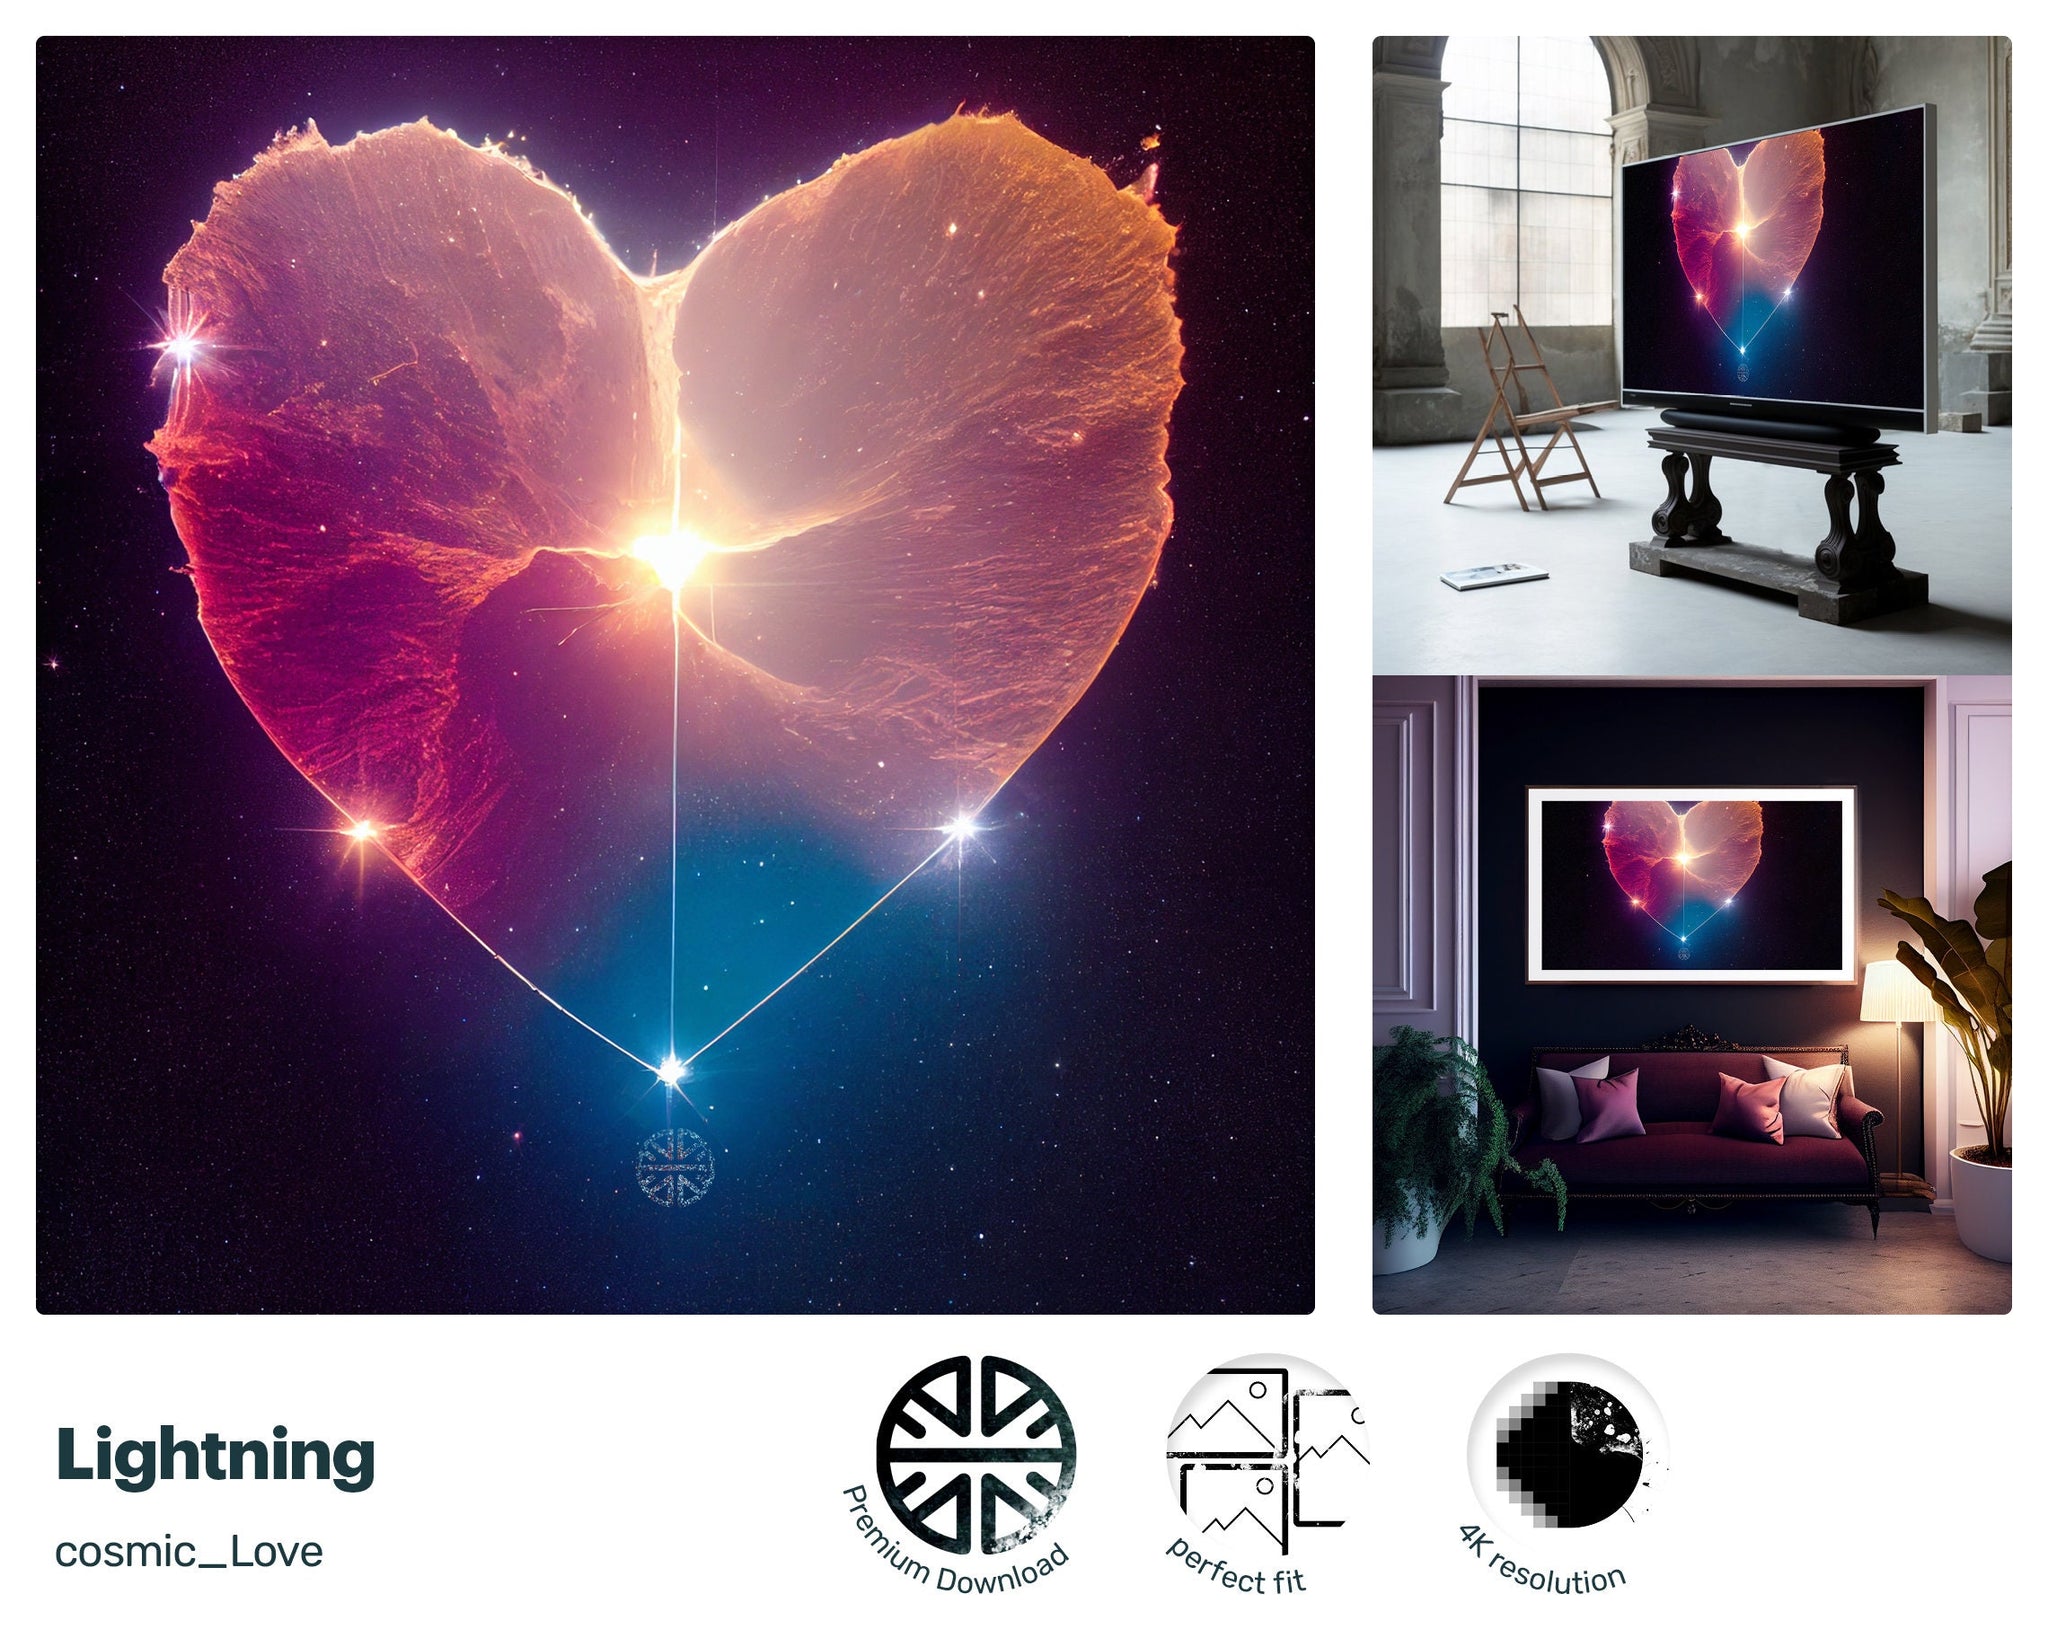 Samsung Frame TV Art, Lightning, james webb telescope, nerd culture, 2001 Space Odyssey, mens valentines gift